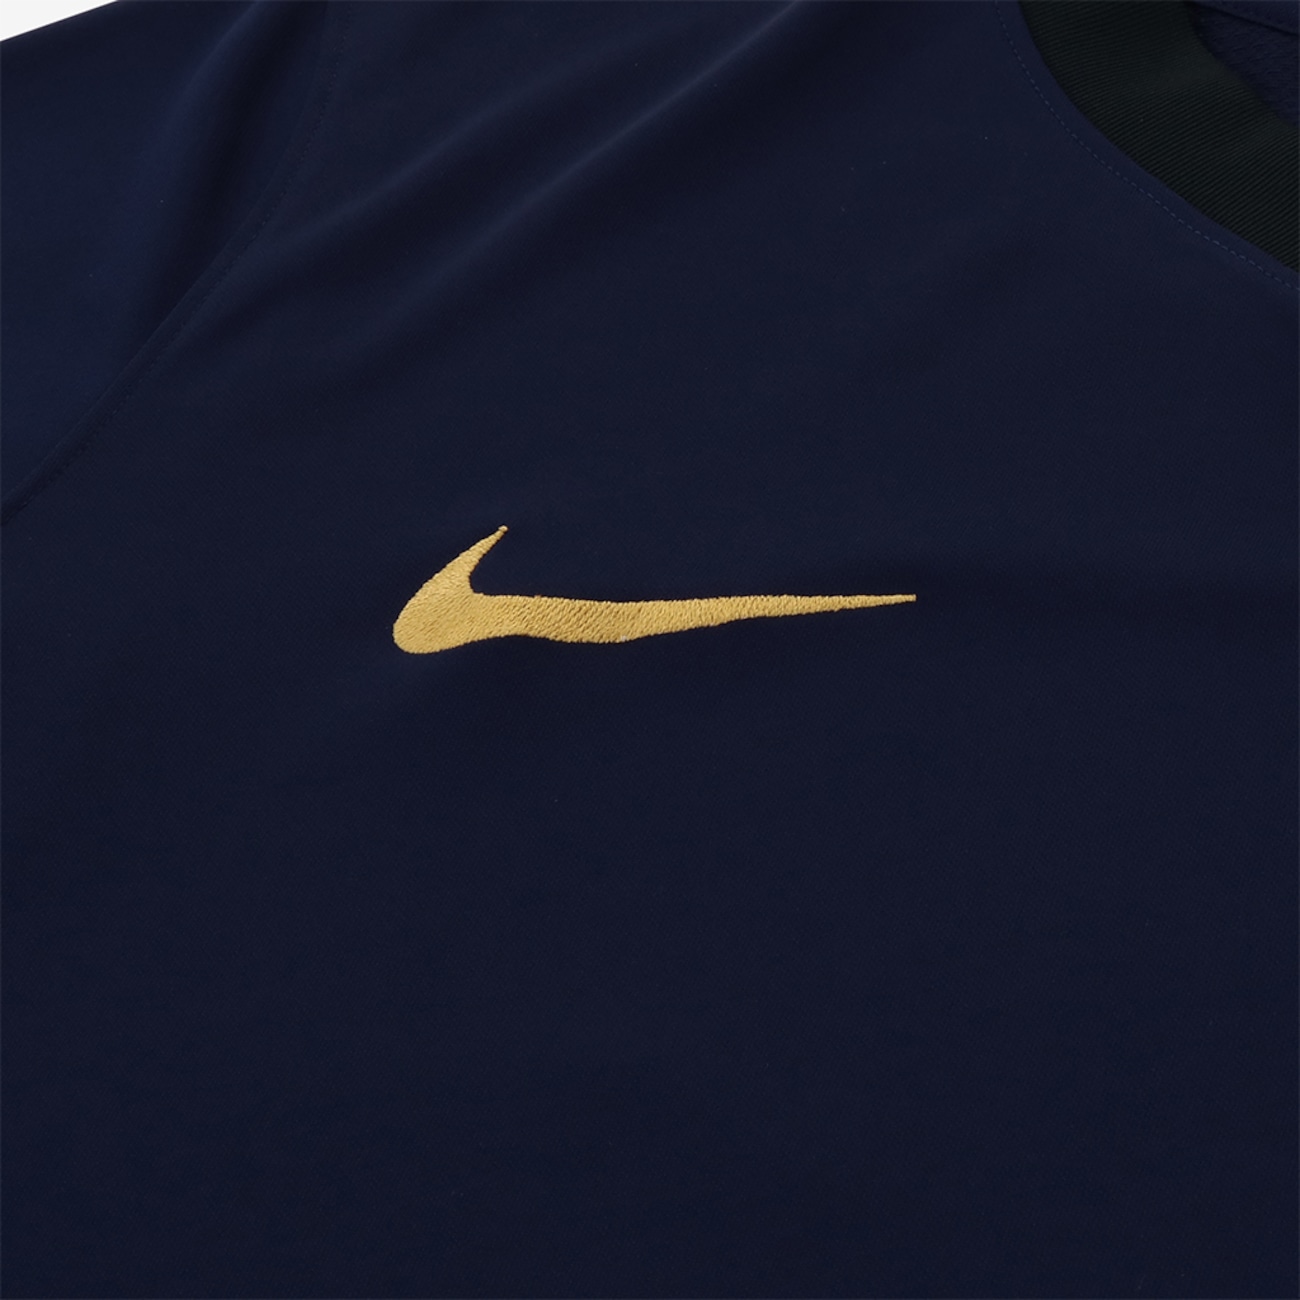 Camisa Nike Corinthians III Dri FIT Foundation Masculina - Foto 4